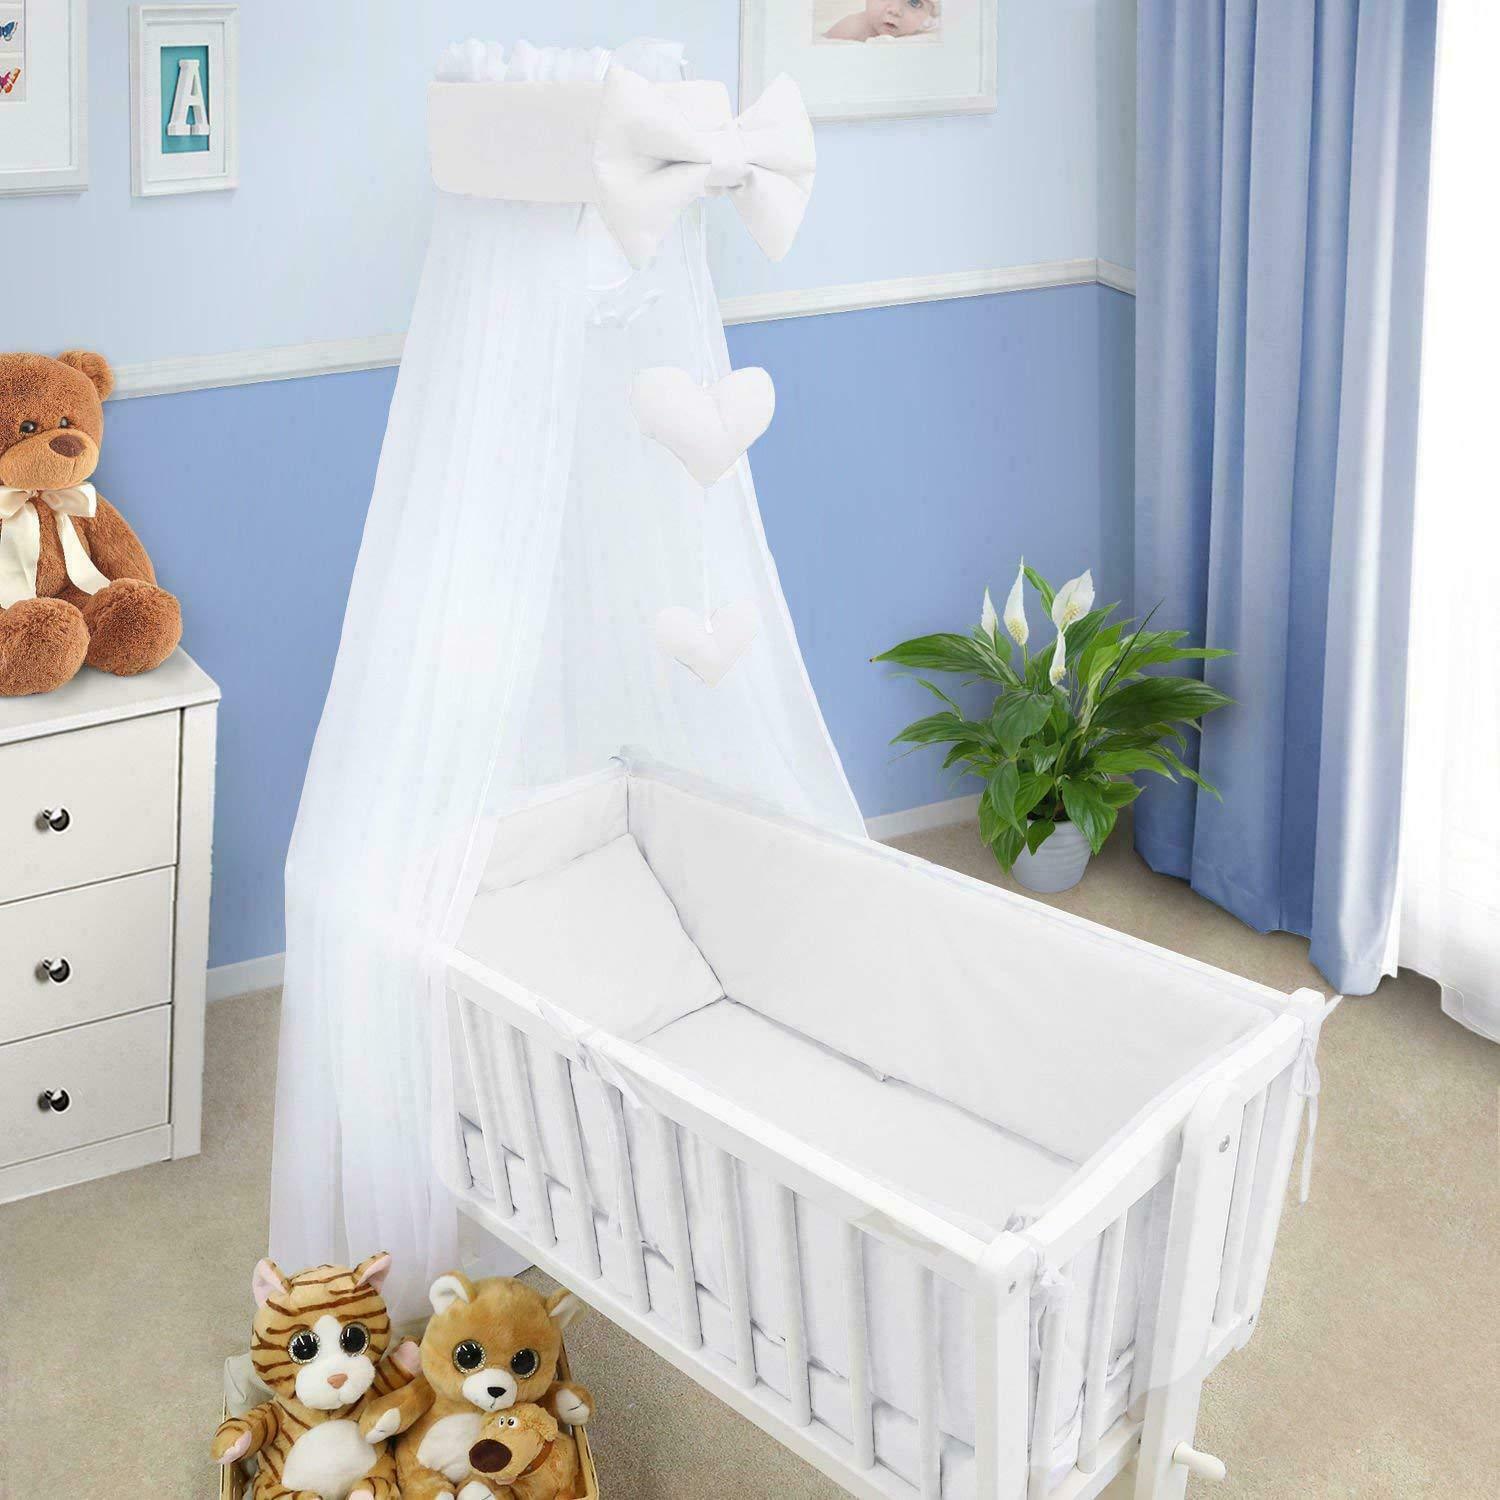 Baby bedding set 6pc 70x80 fit crib bumper pillow duvet sheet - White